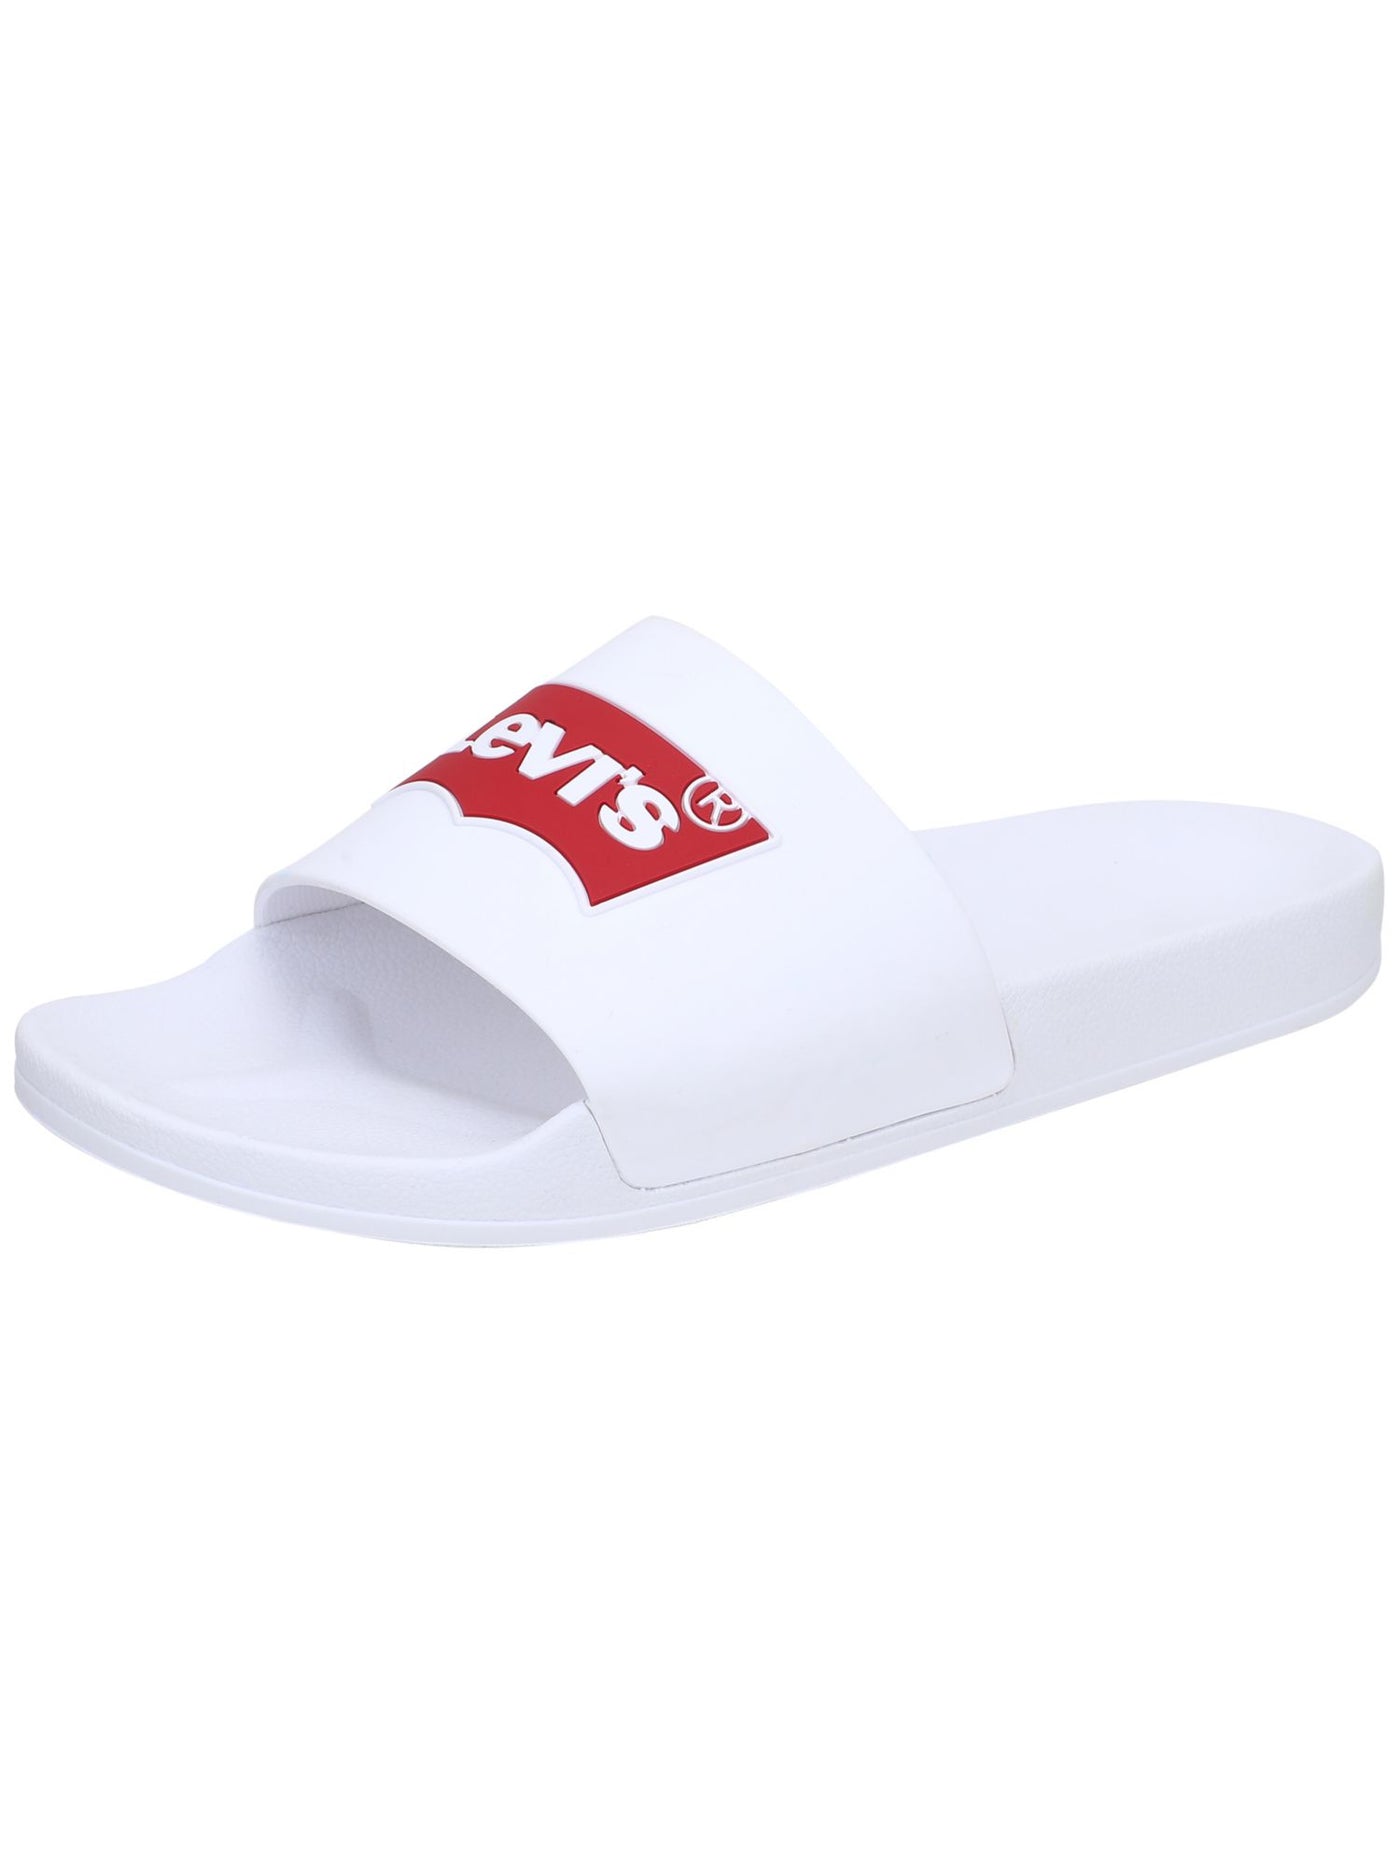 LEVI'S Mens White Batwing-logo Open Toe Slip On Slide Sandals Shoes 9